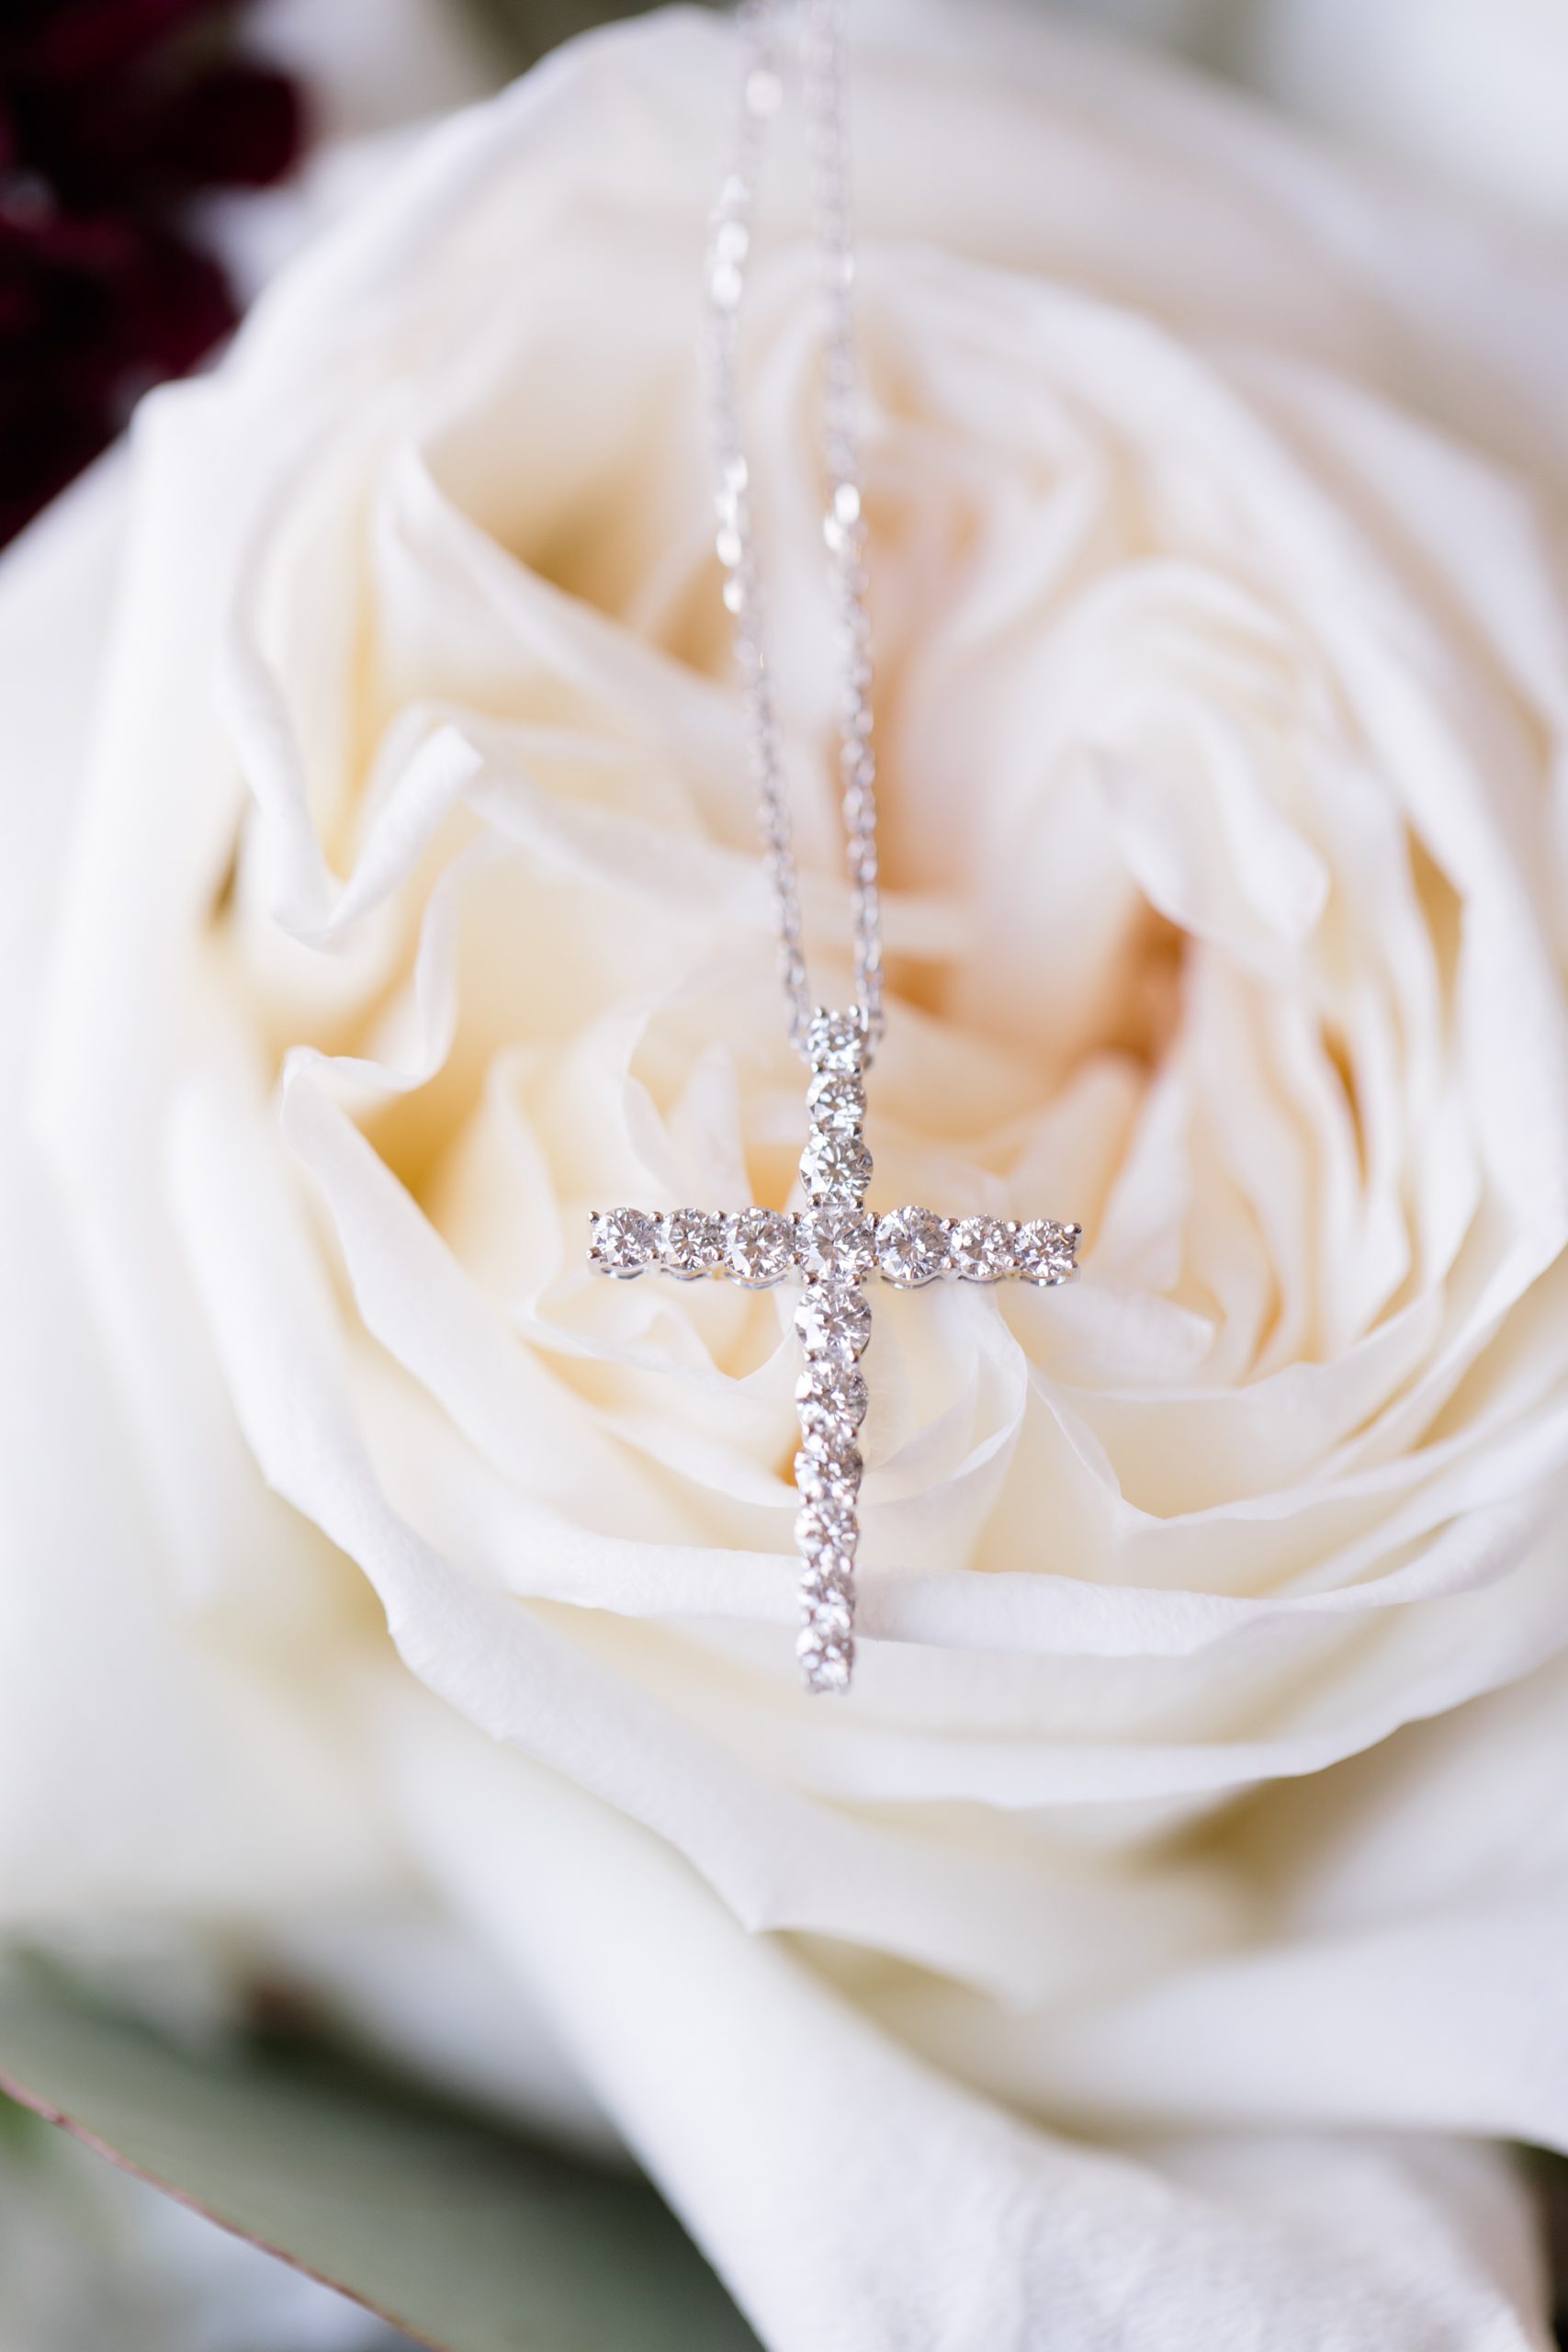 bride's cross necklace rests on ivory rose